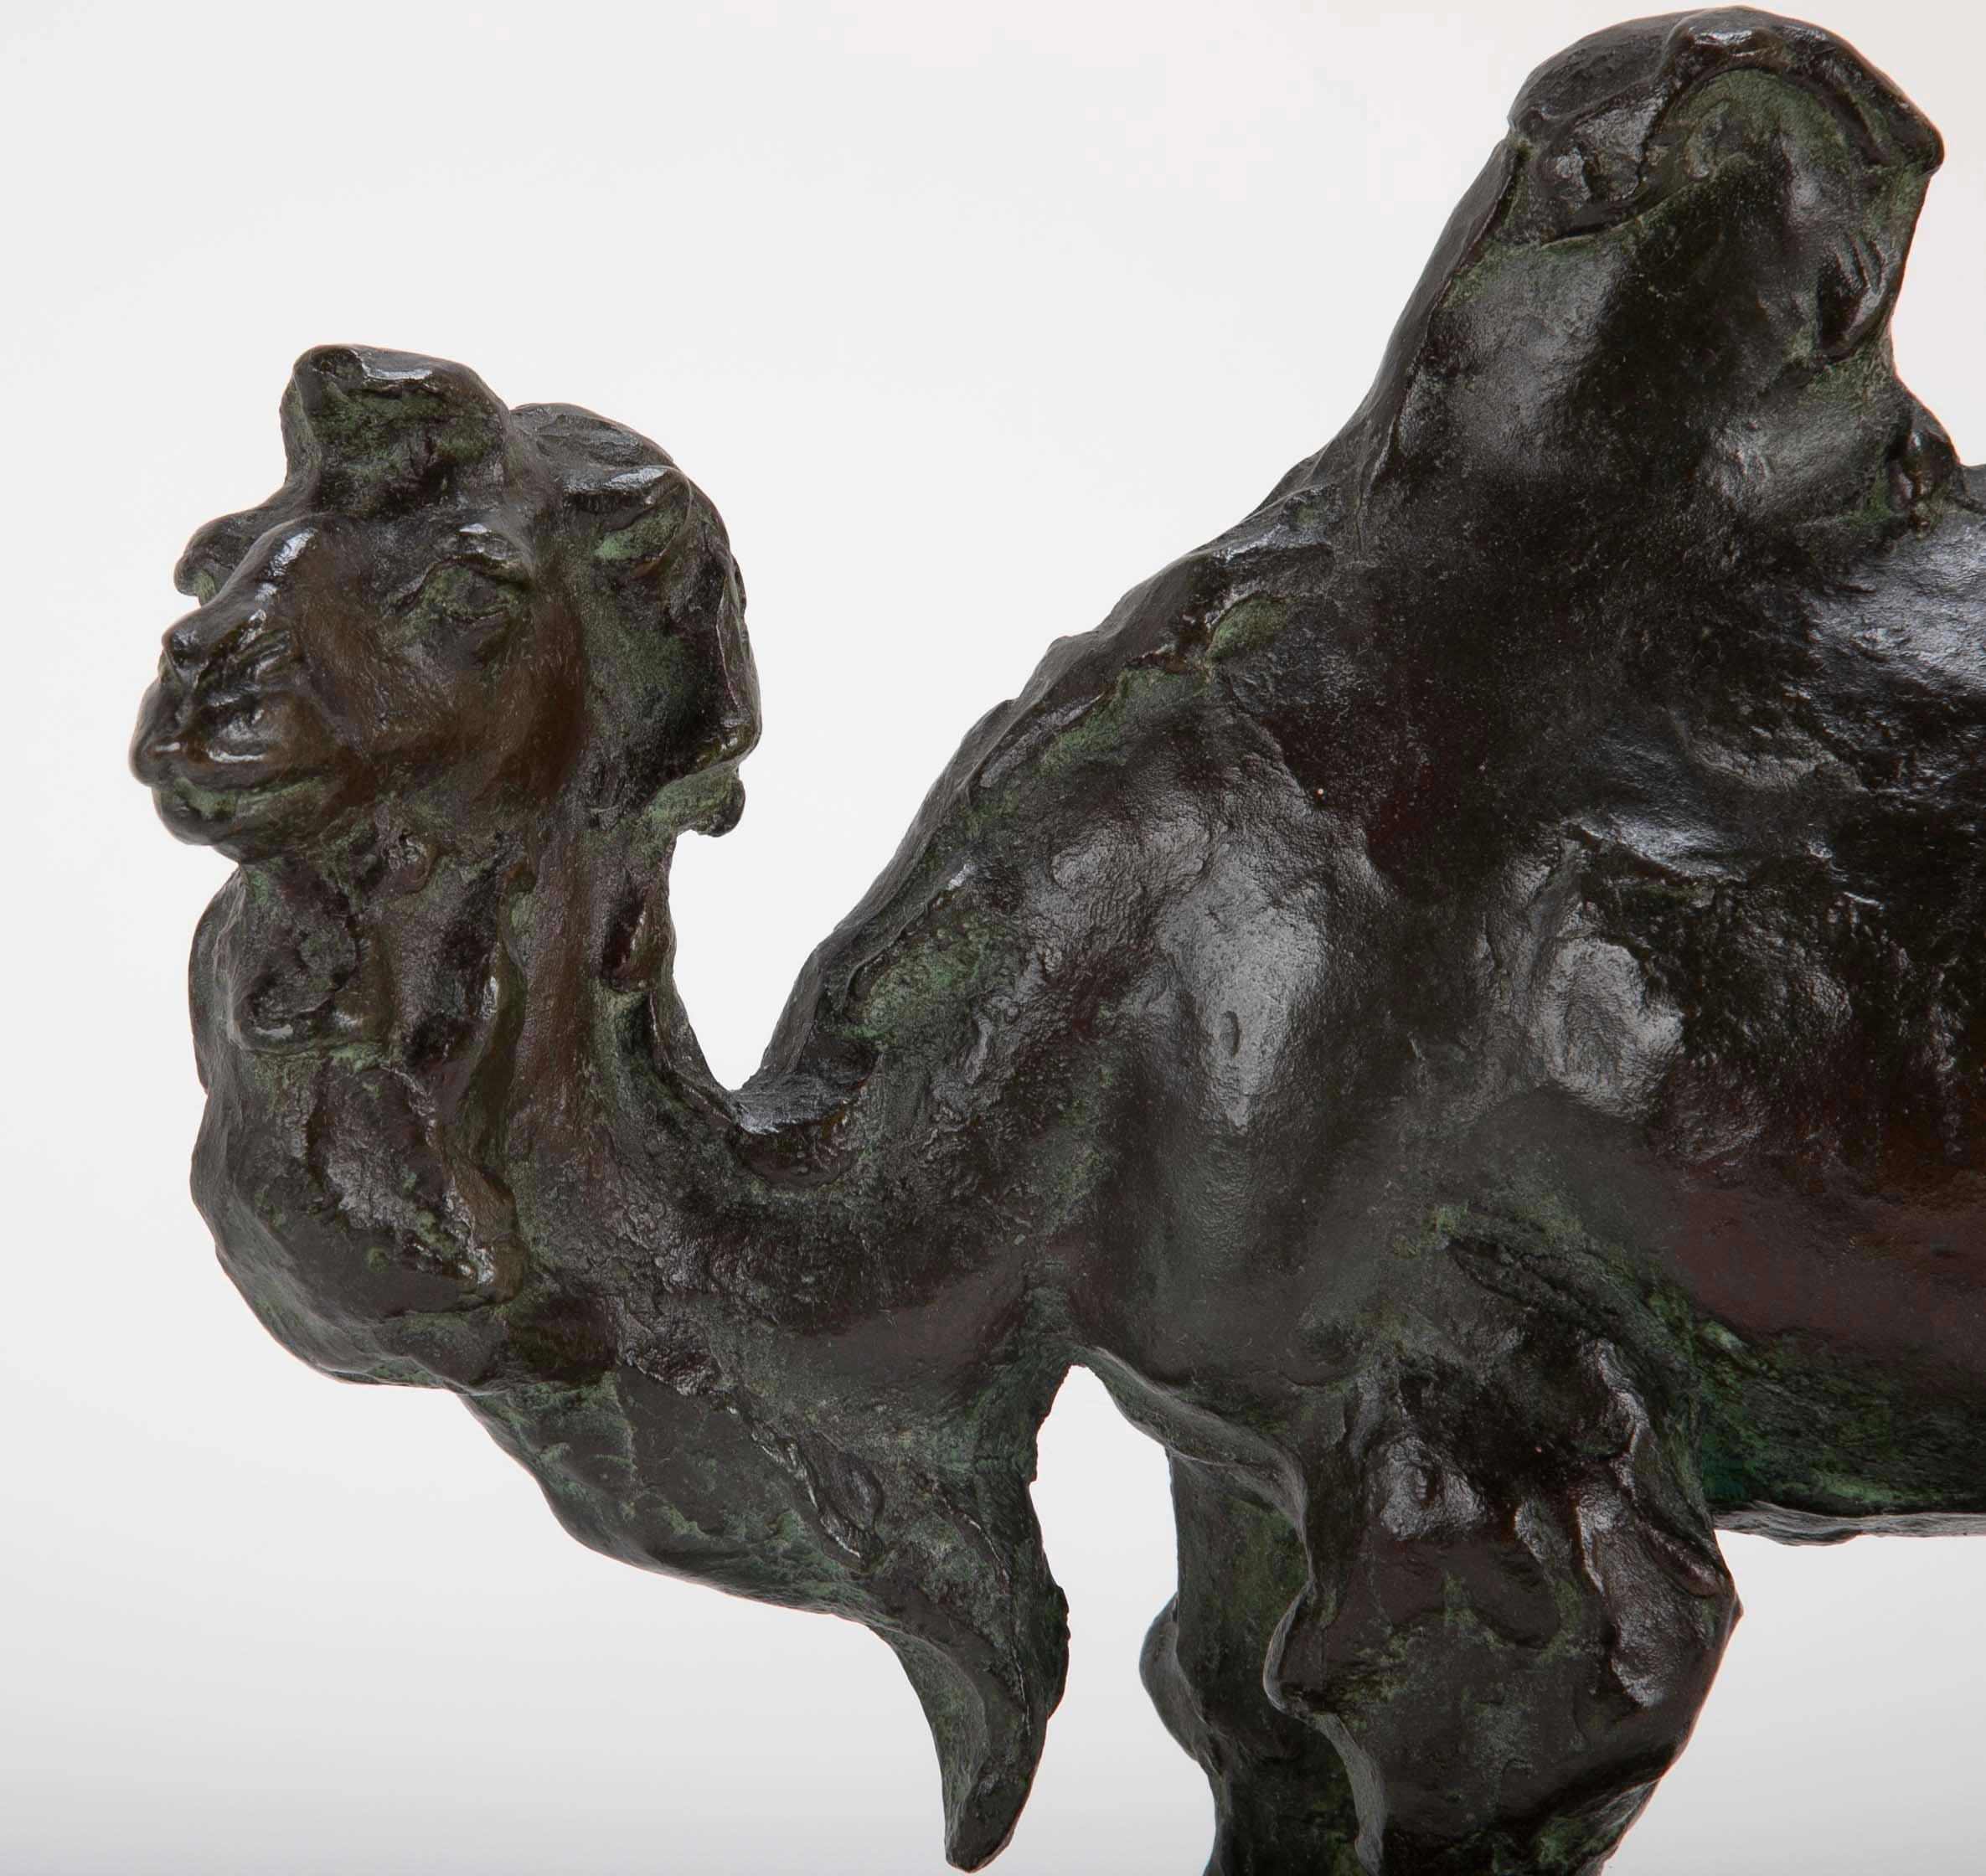 A sculpted Japanese bronze of a Bactrian camel.